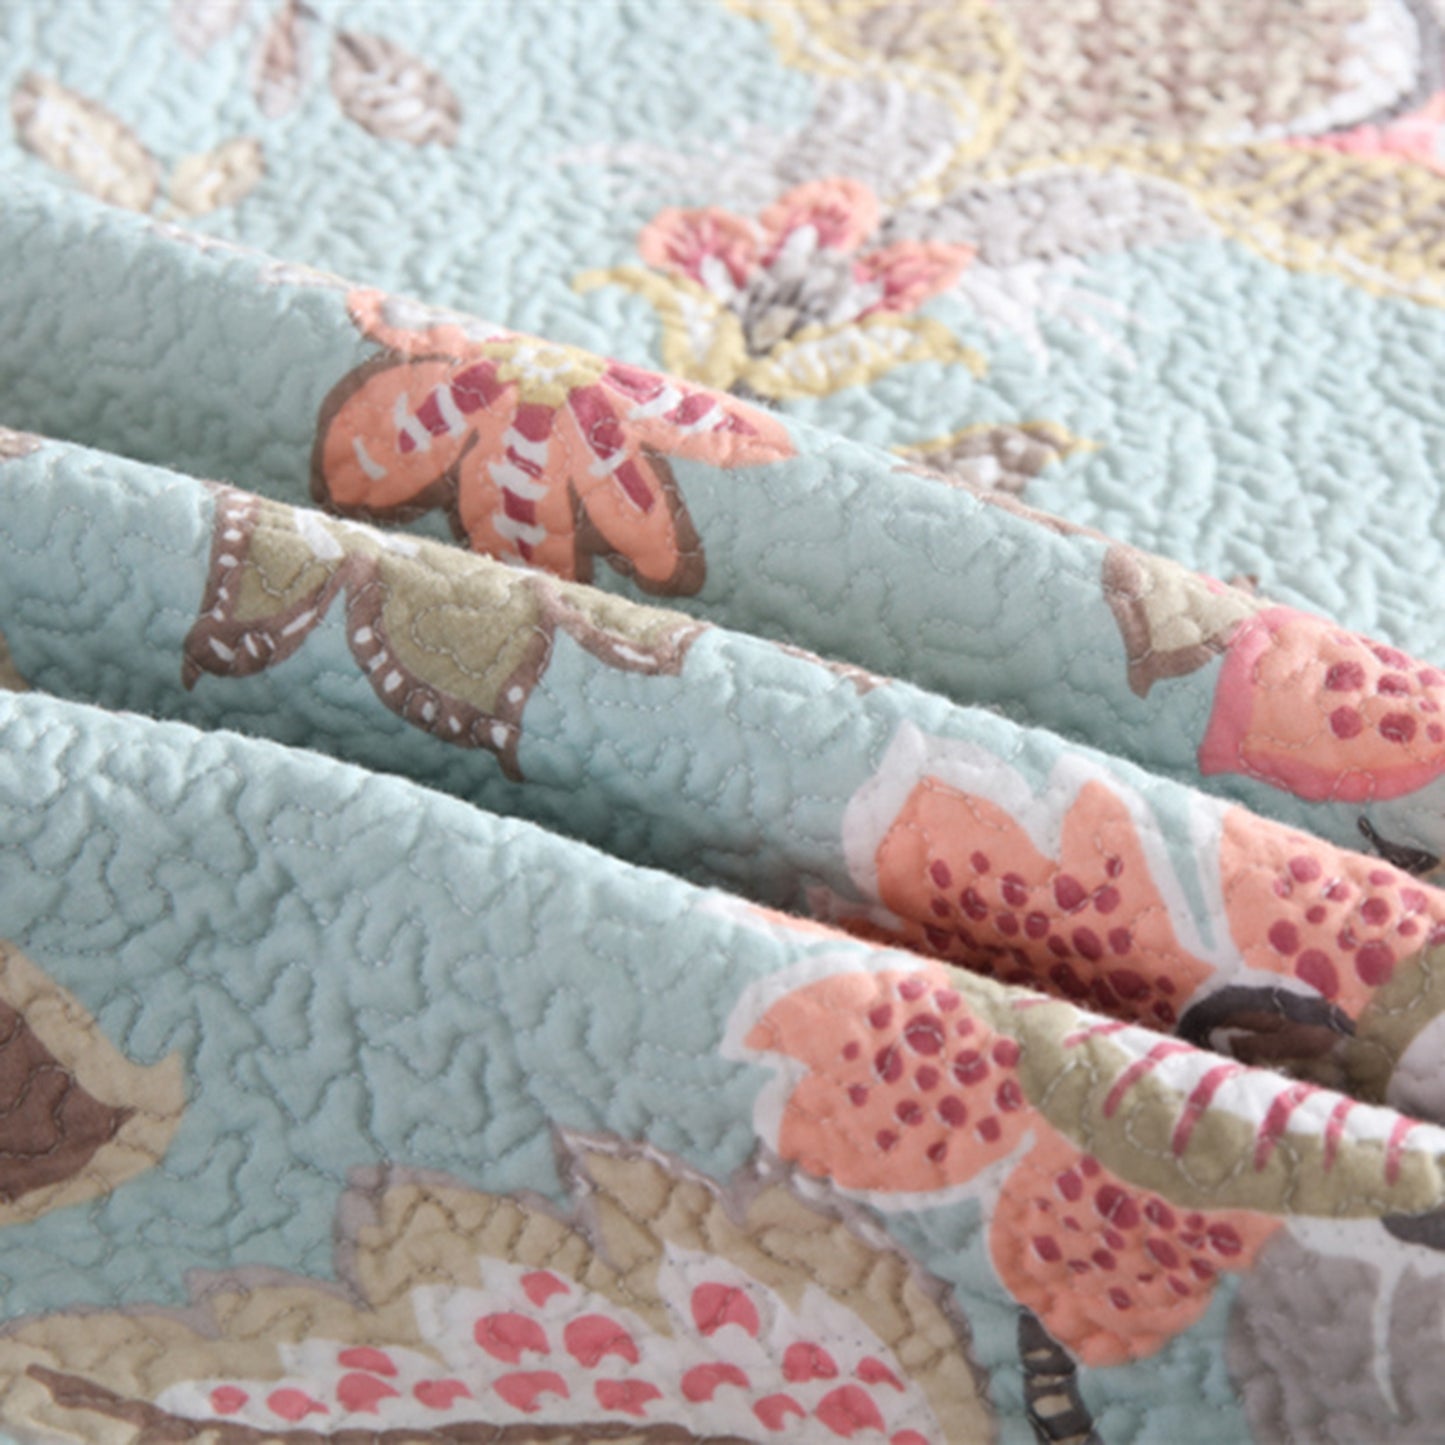 Flower Design Pure Cotton 3 Pieces Quilt Set with 2 Pillowcases